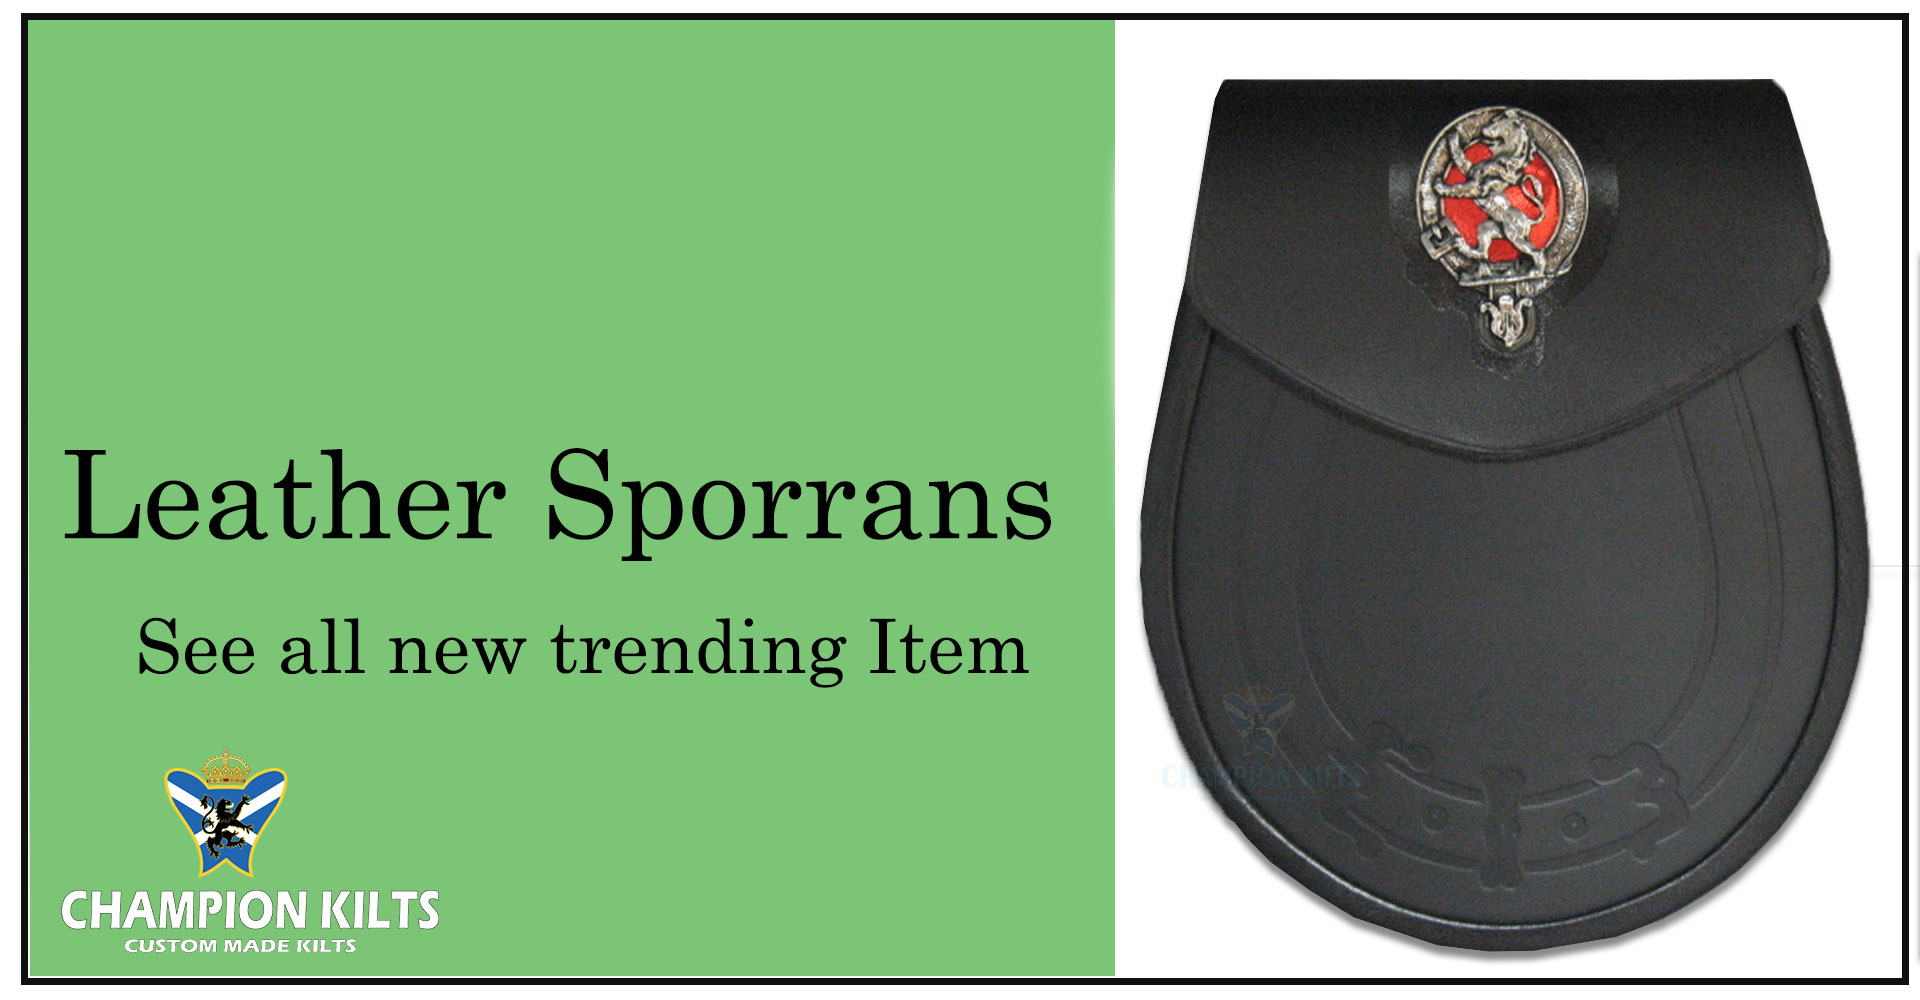 Leather Sporrans